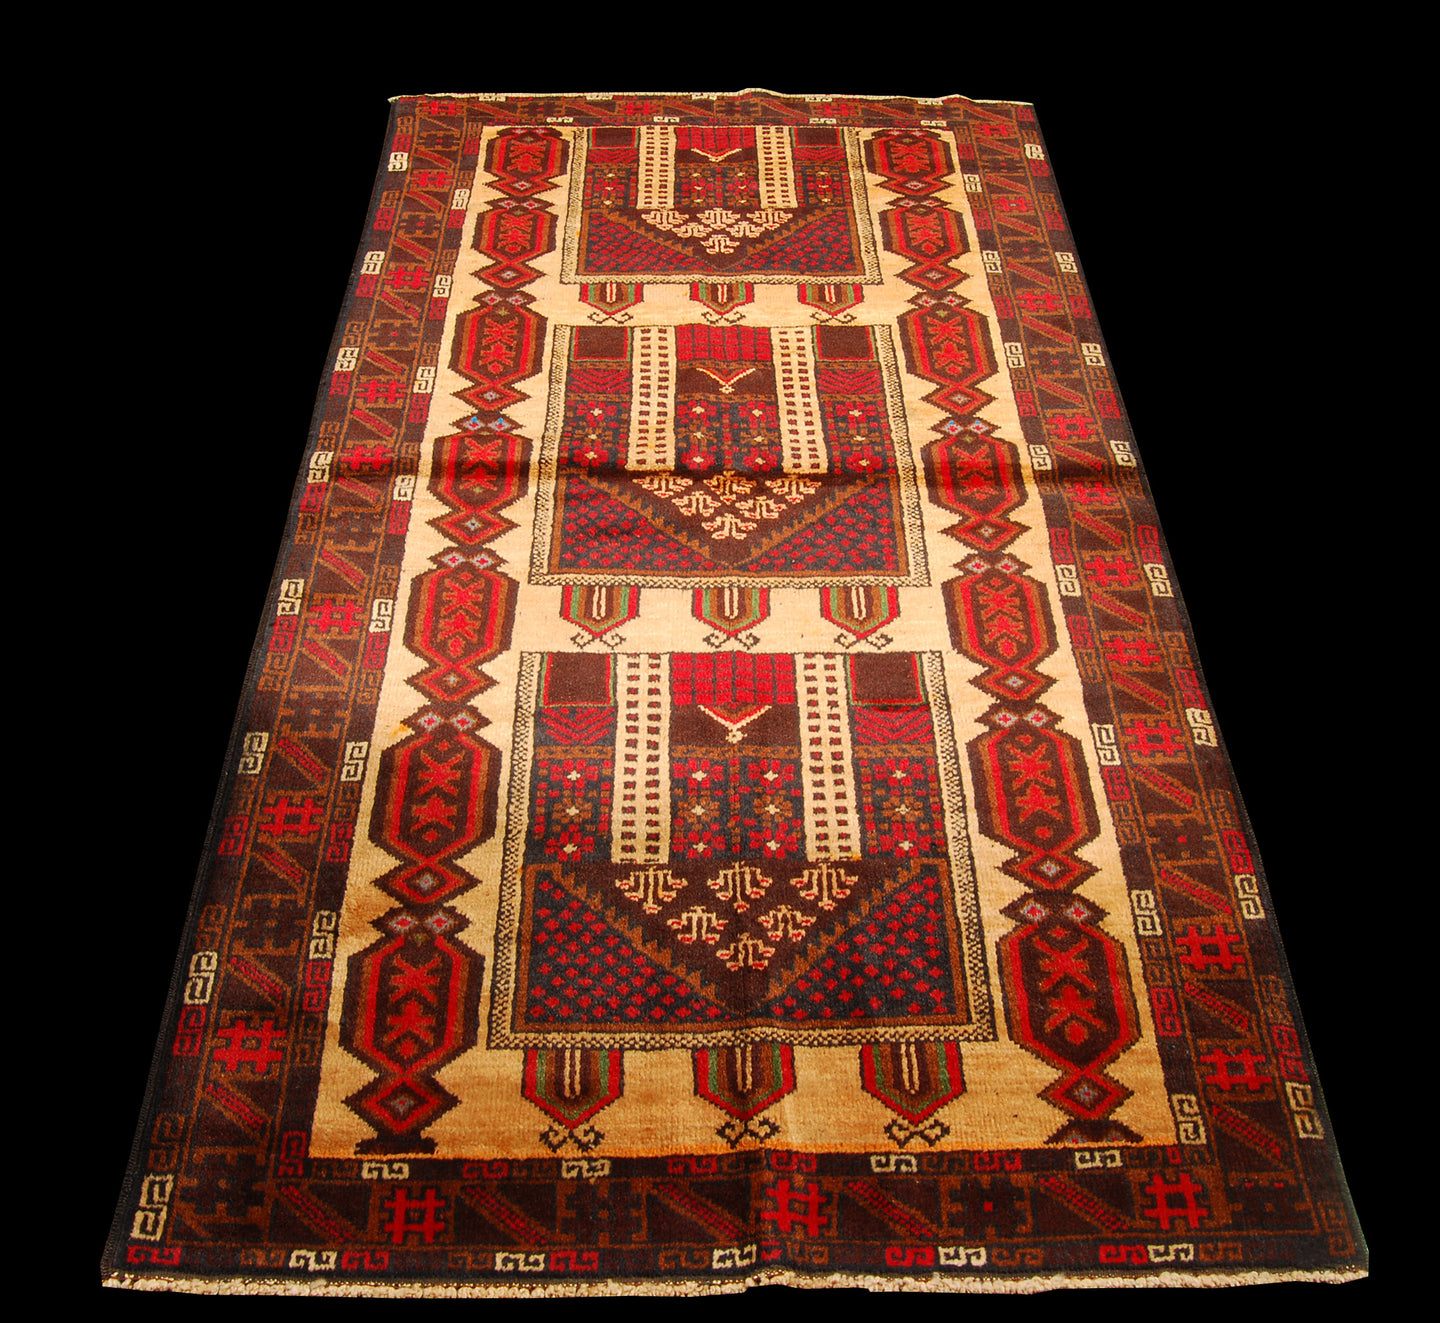 Genuine, Original Pure Wool Rug Rustic Handmad Carpet CM 199x108